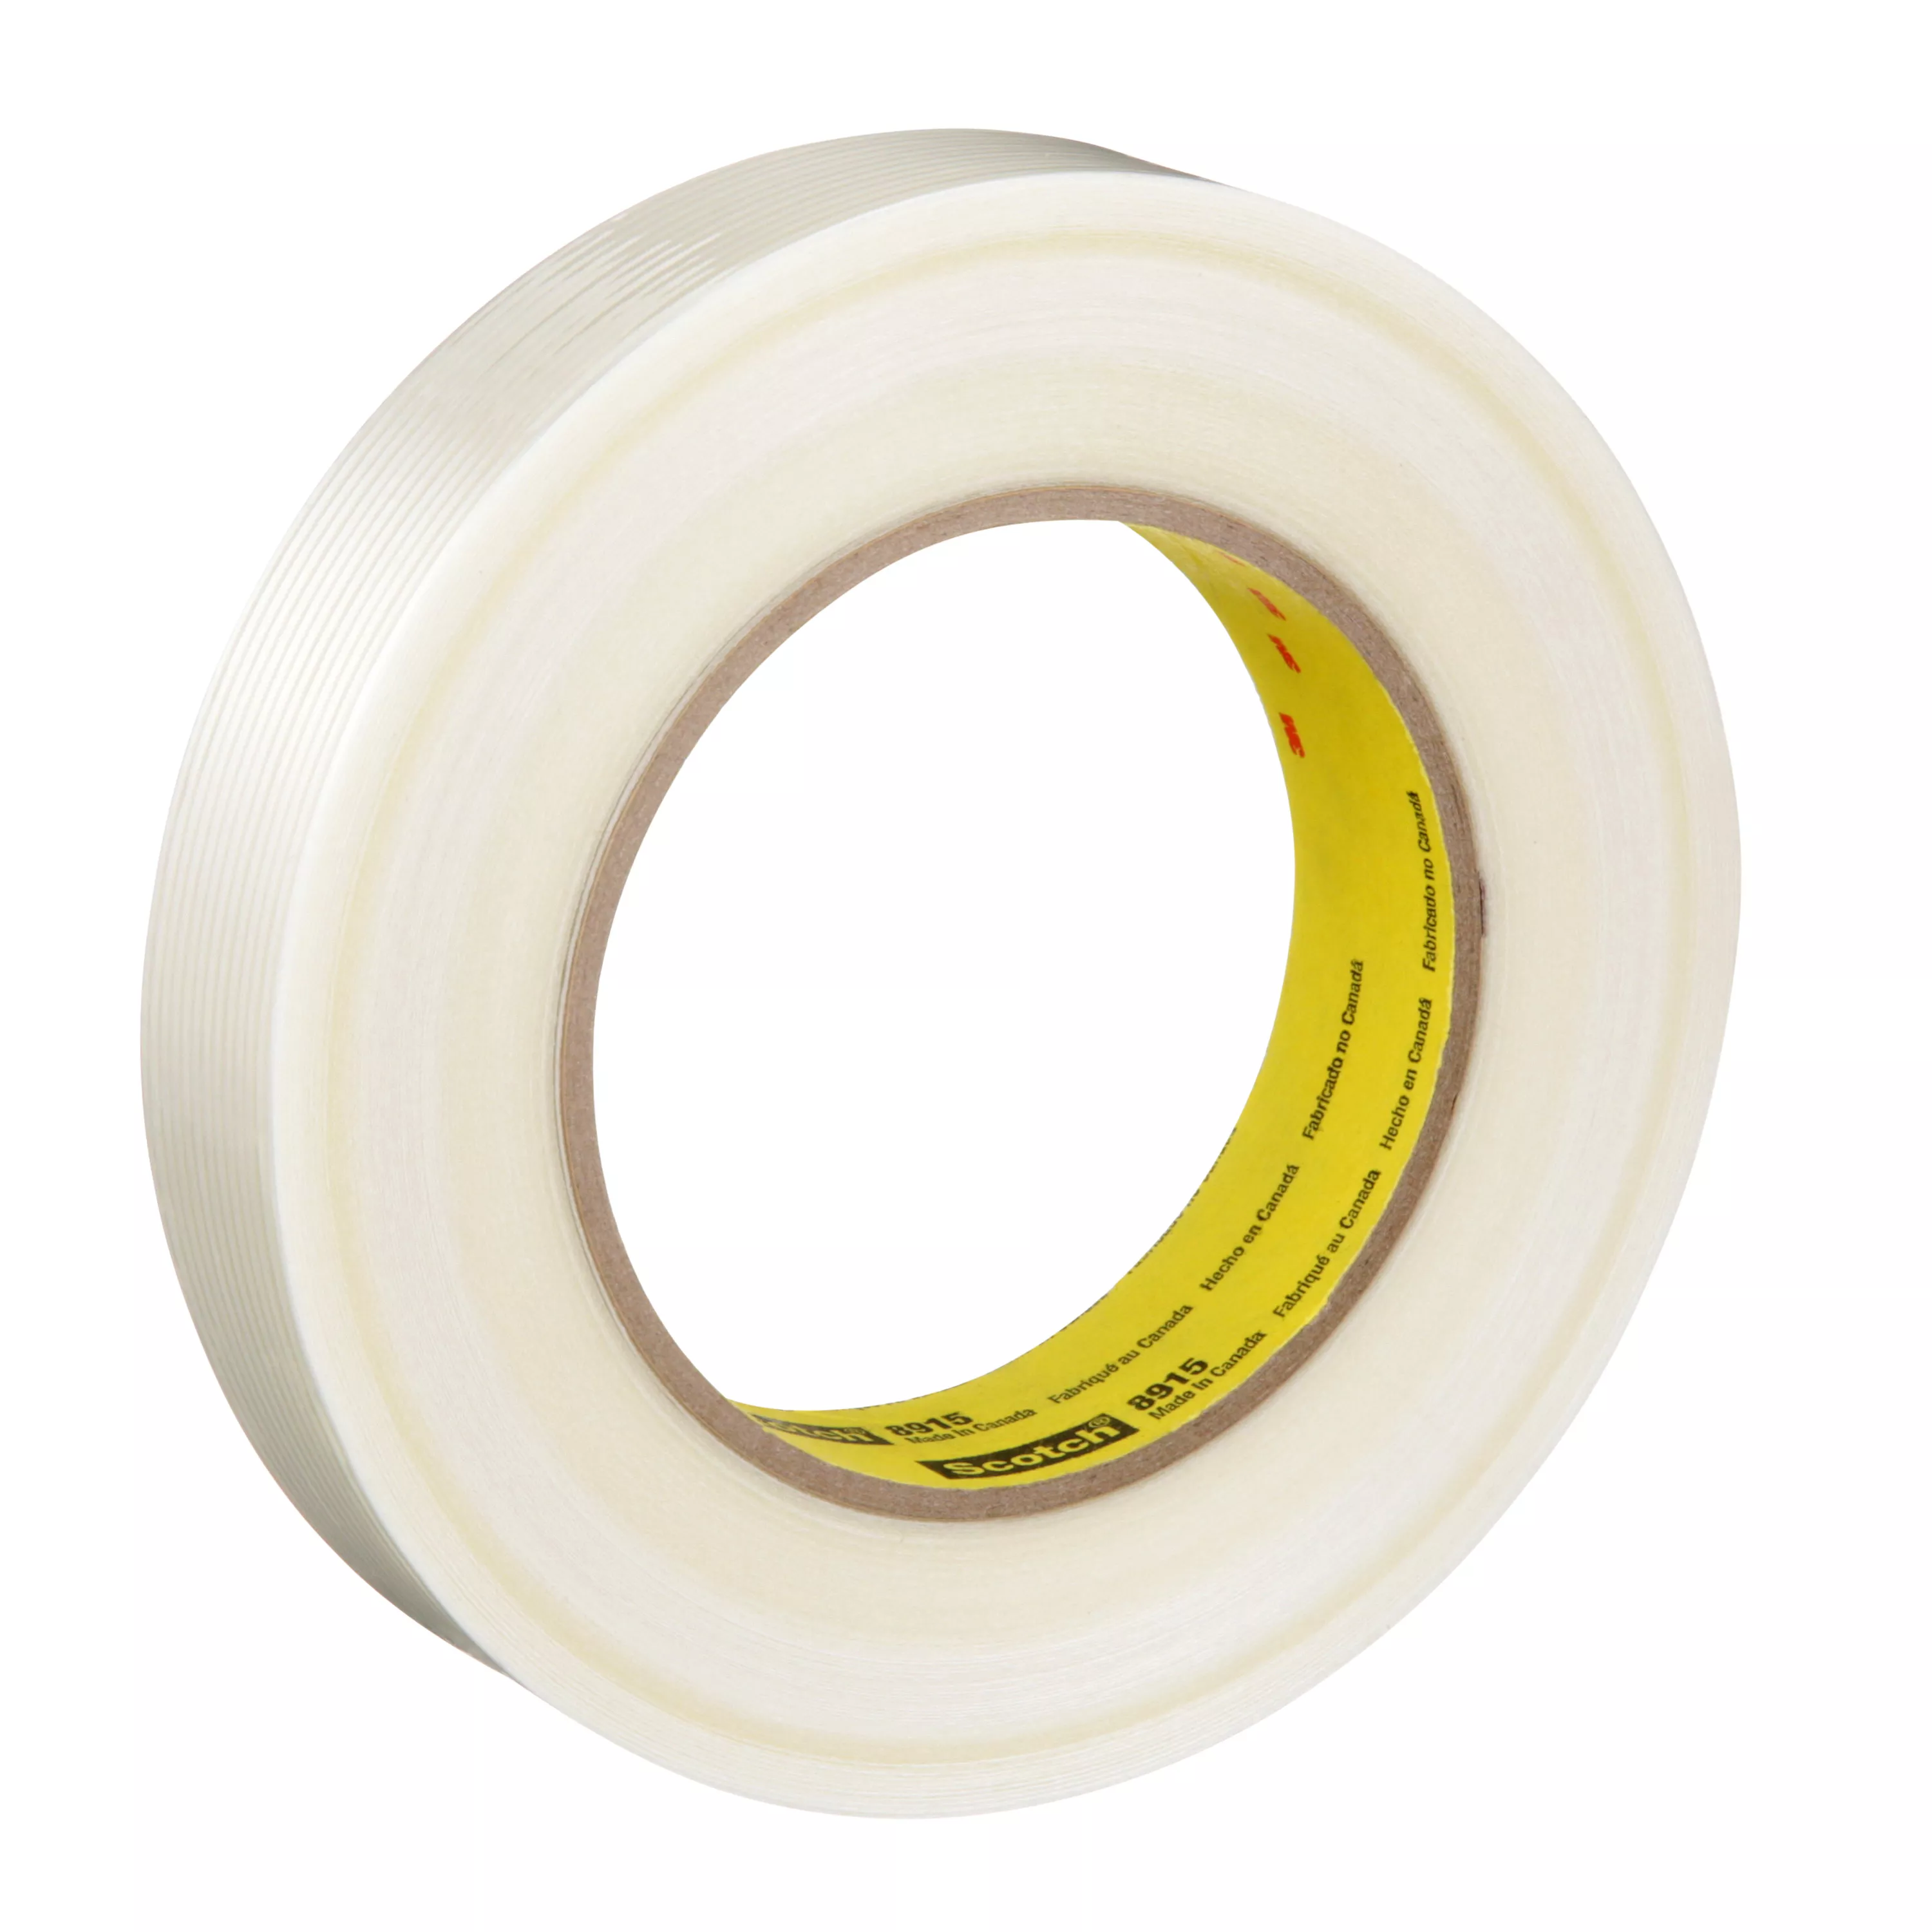 Scotch® Filament Tape Clean Removal 8915, 18 mm x 55 m, 6 mil, 48
Roll/Case